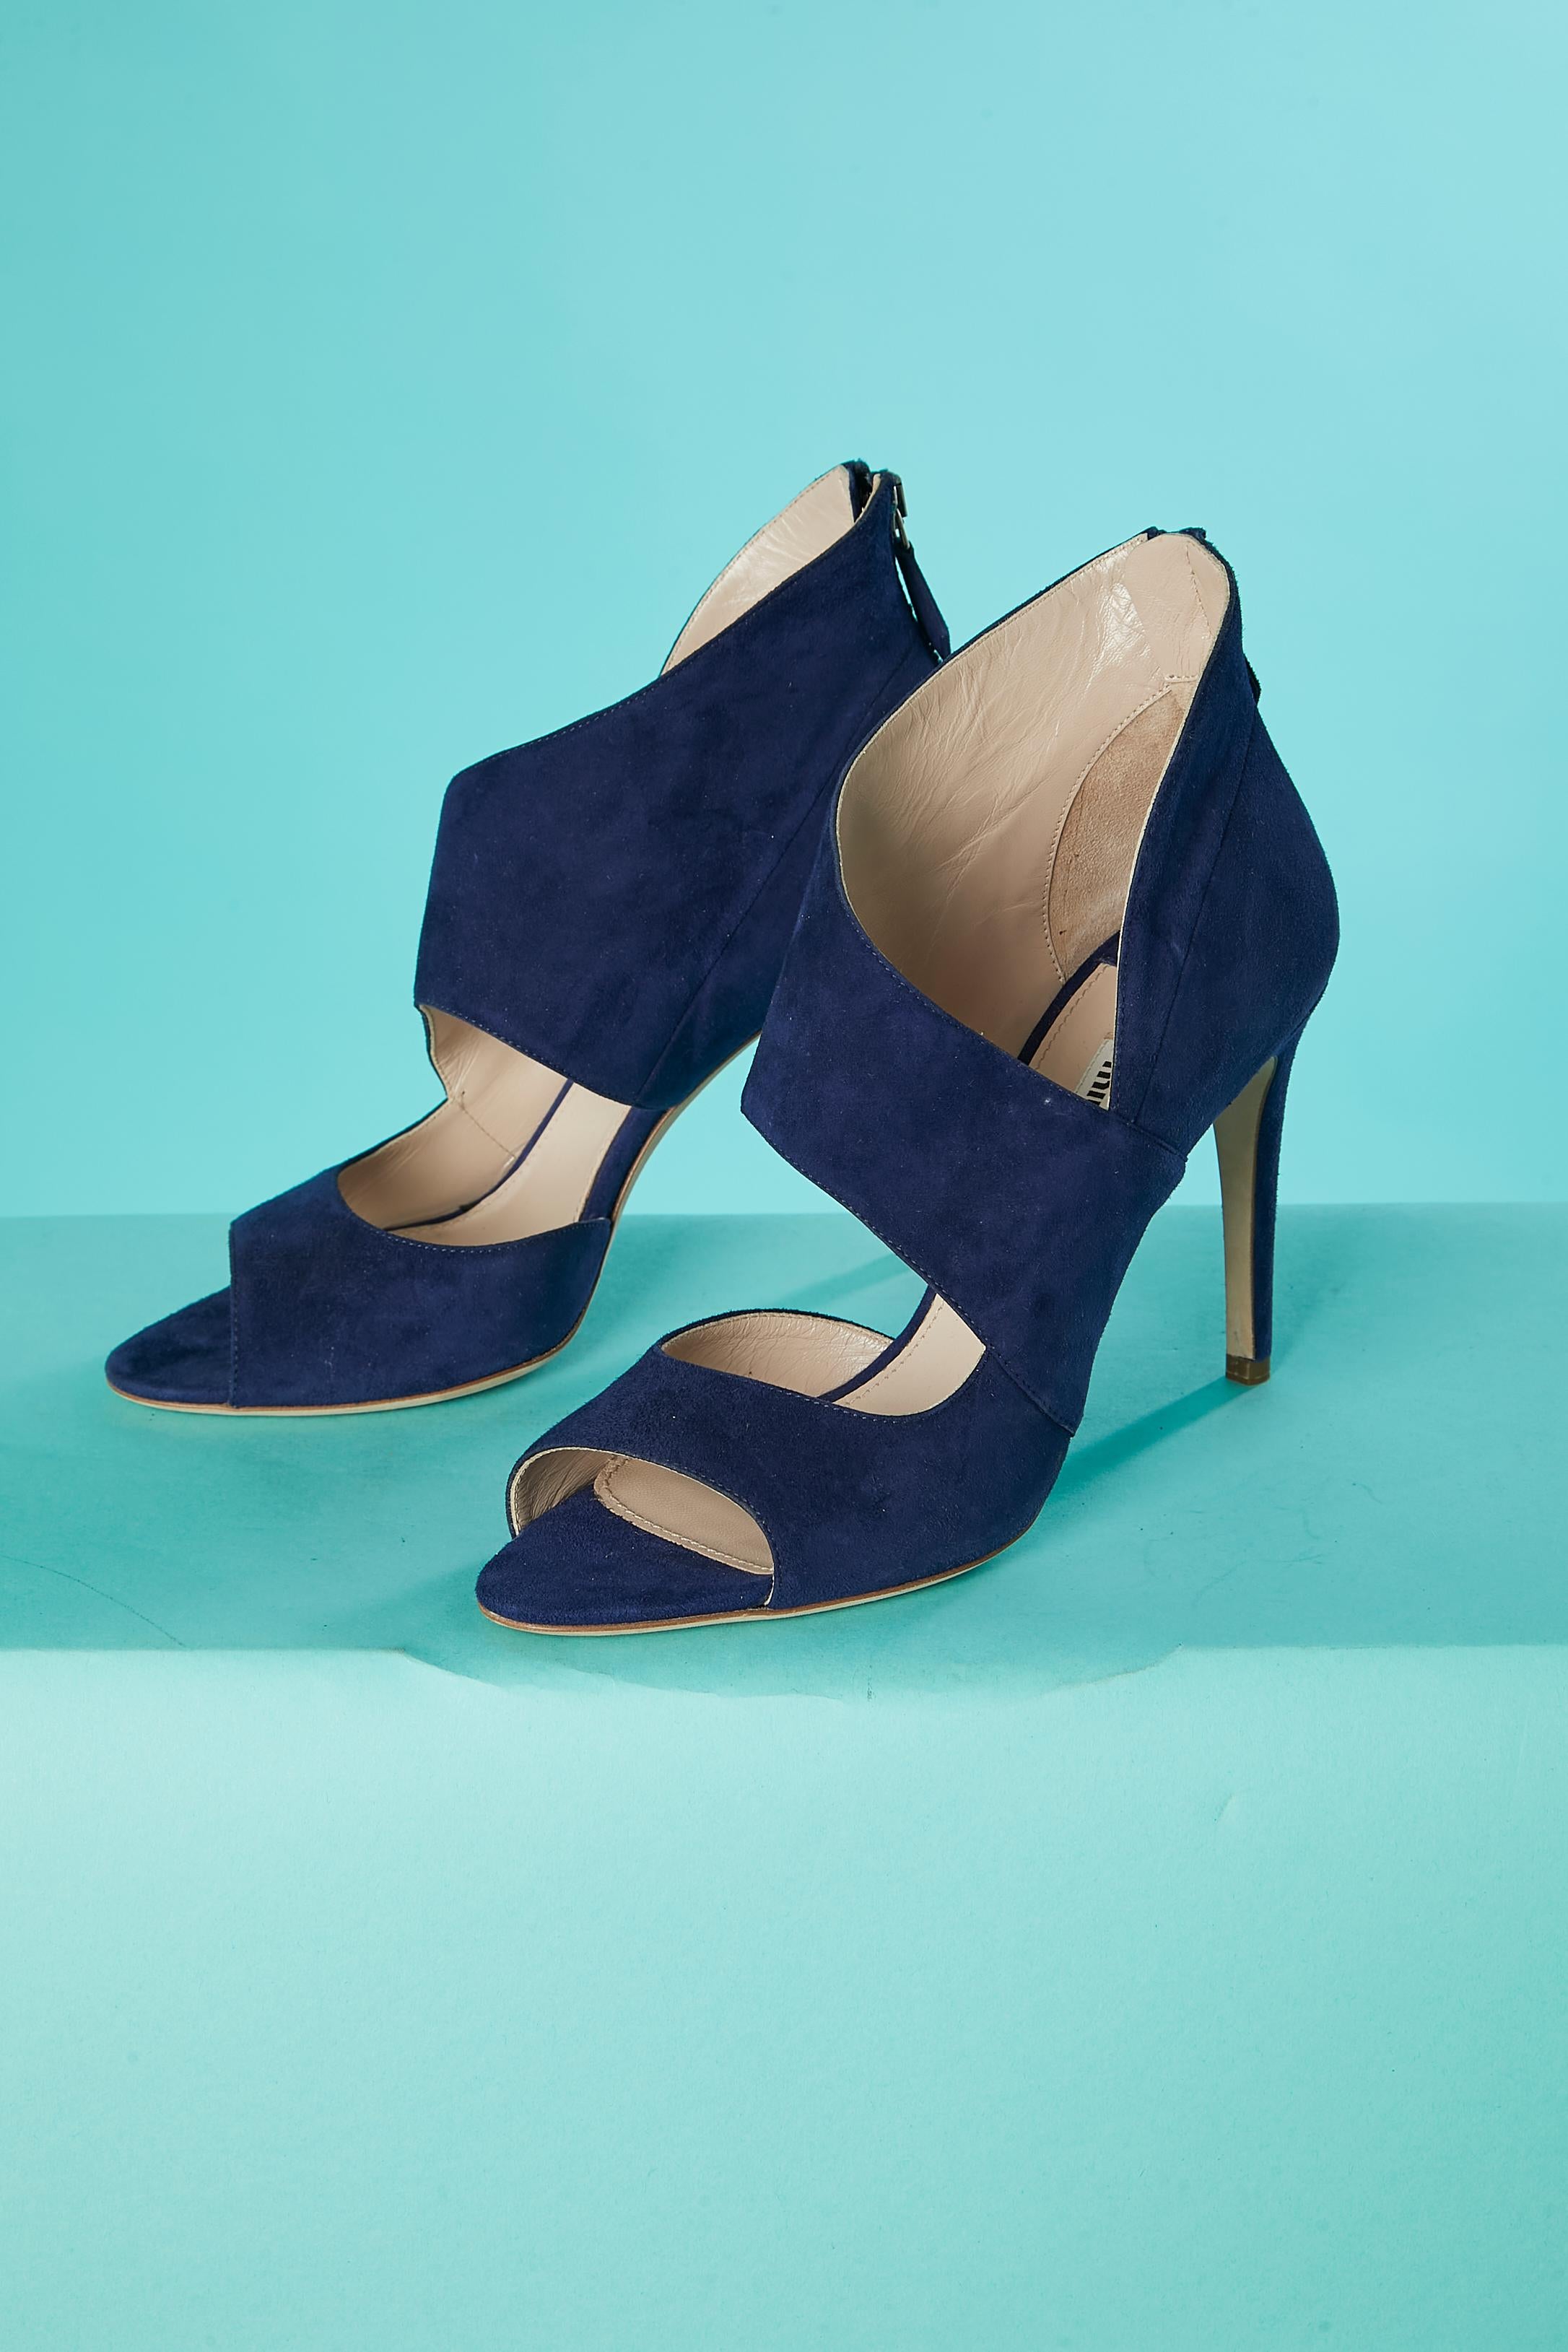 Blue suede open-toe sandals with zip in the top back.
Heel's height : 10 cm
SHOE SIZE : 39 (Eu) 7,5 (Us) 